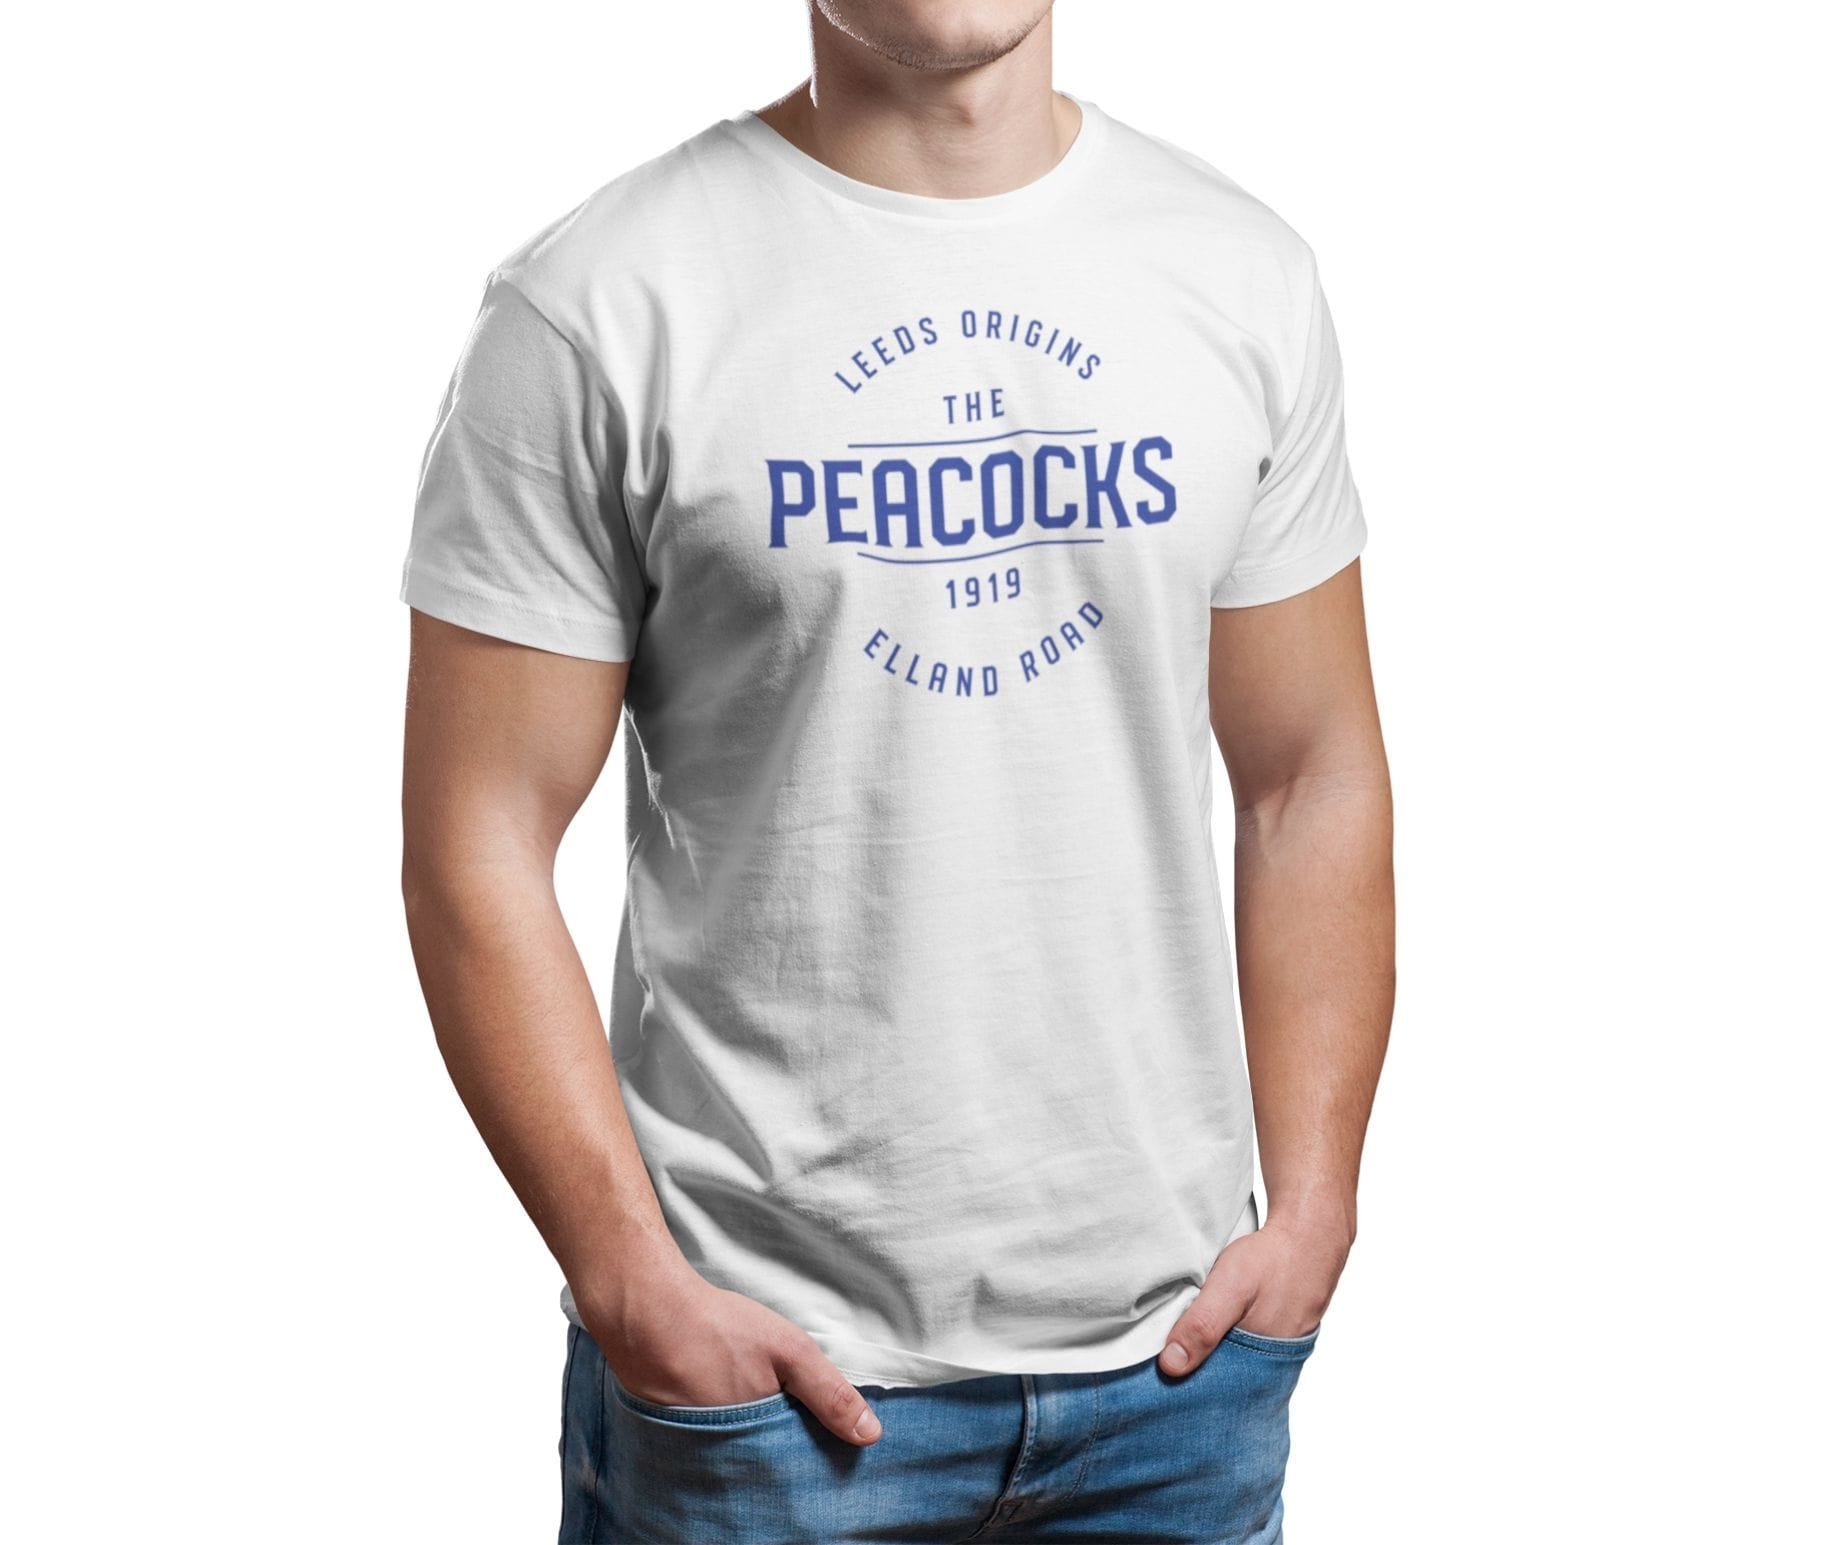 The Peacocks T-Shirt